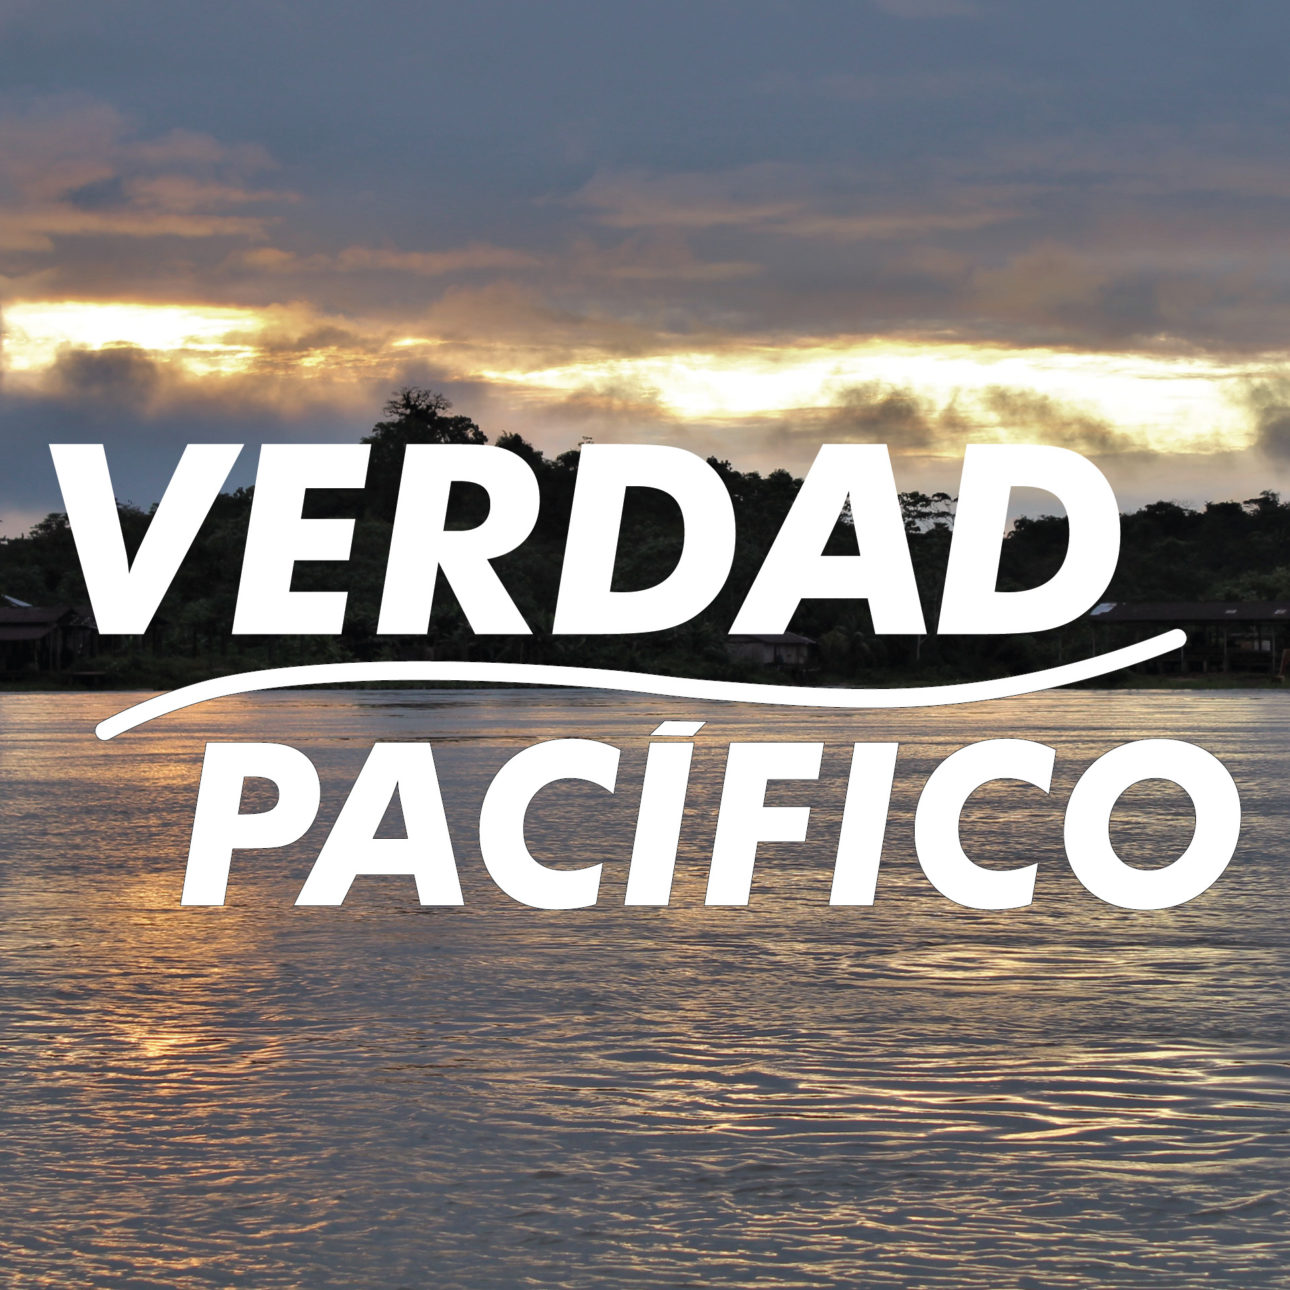 Serie Documental Verdad Pacífico